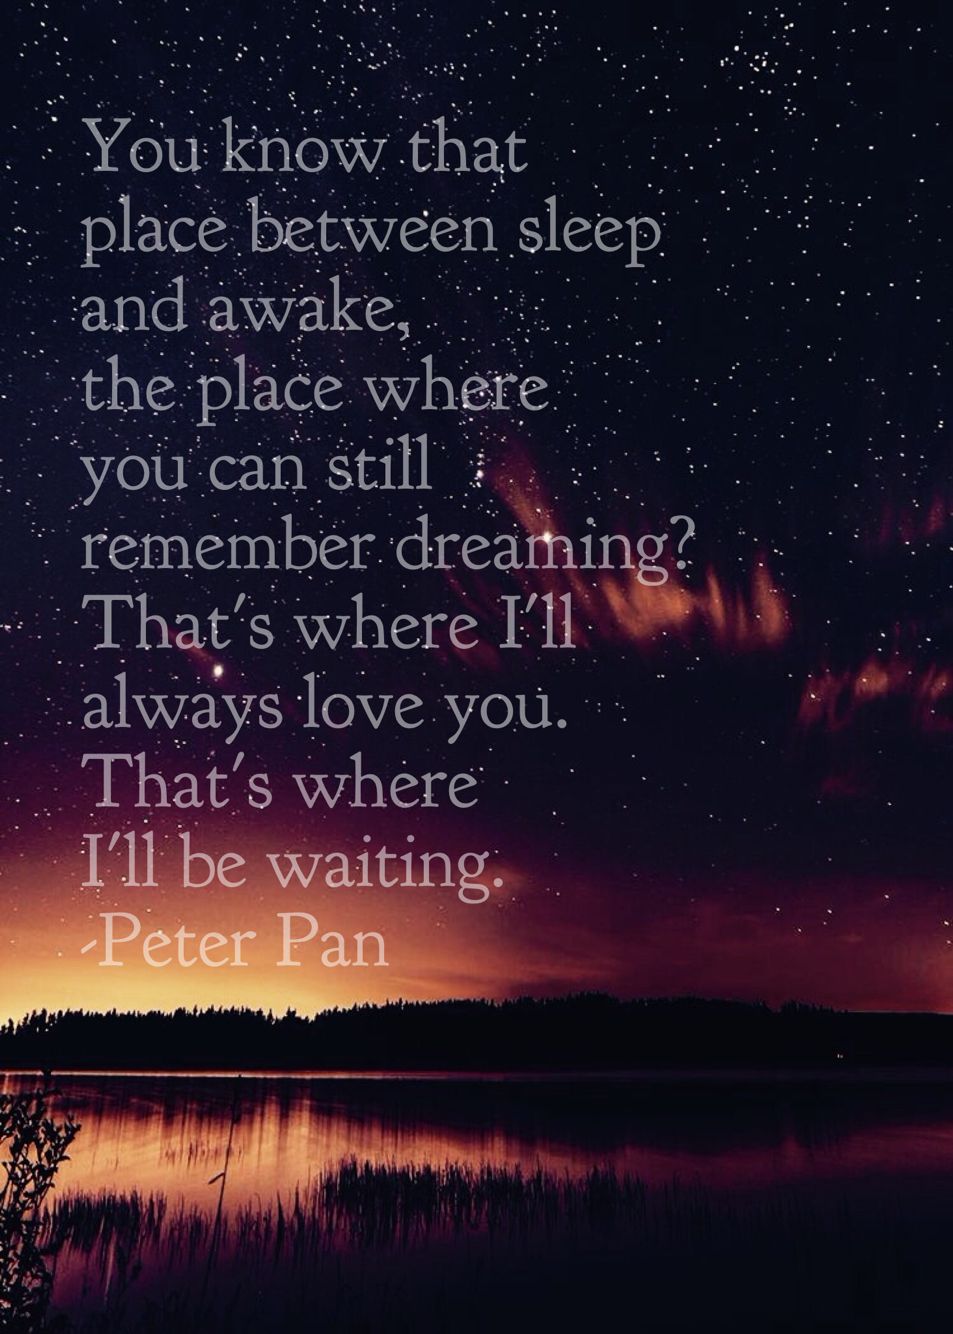 Peter Pan Quotes Wallpaper Free Peter Pan Quotes